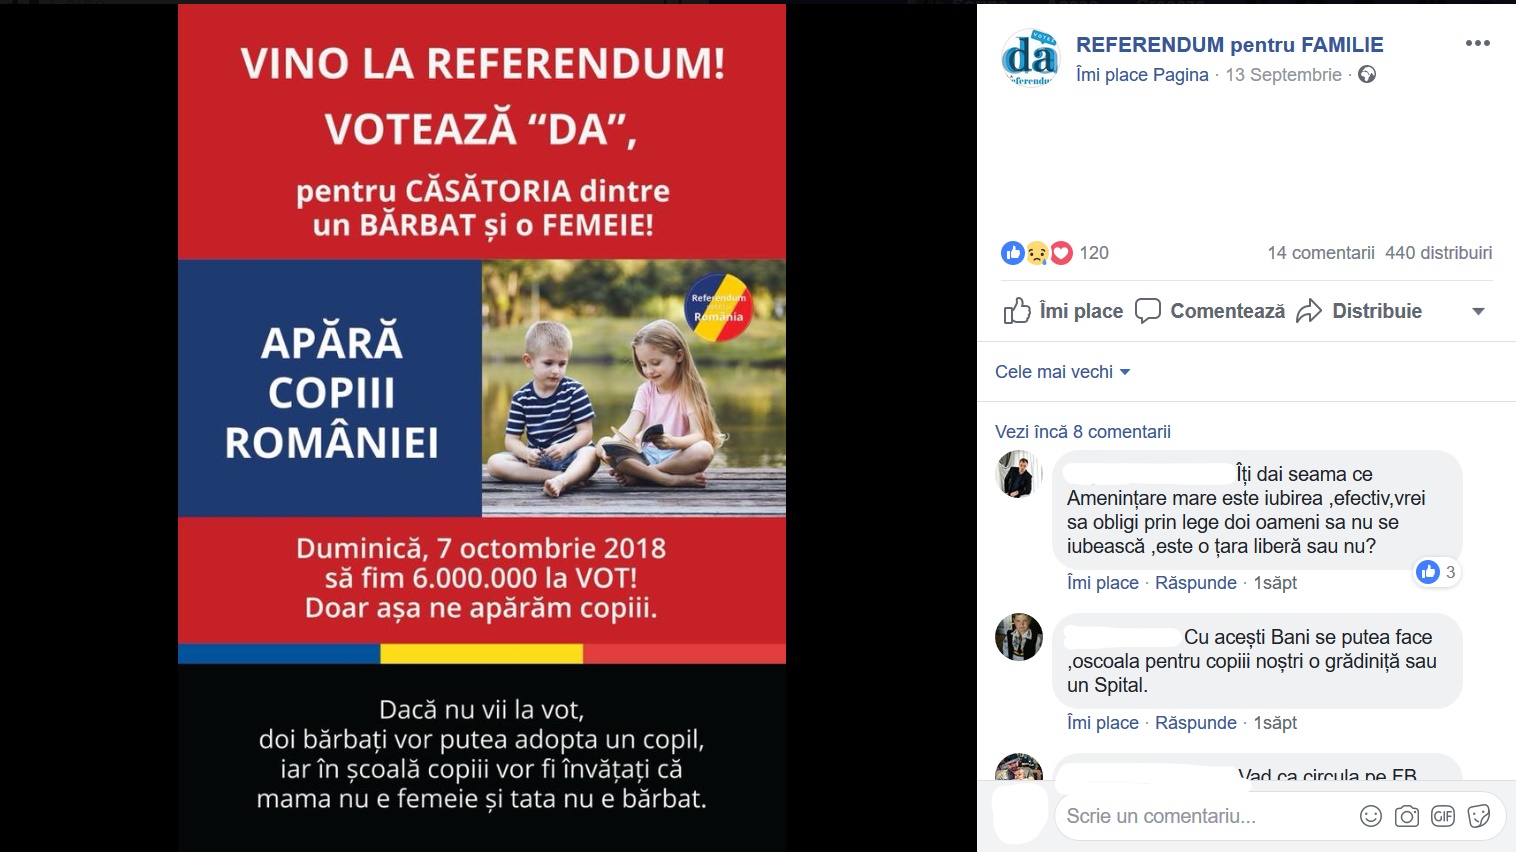 Referendum 2018